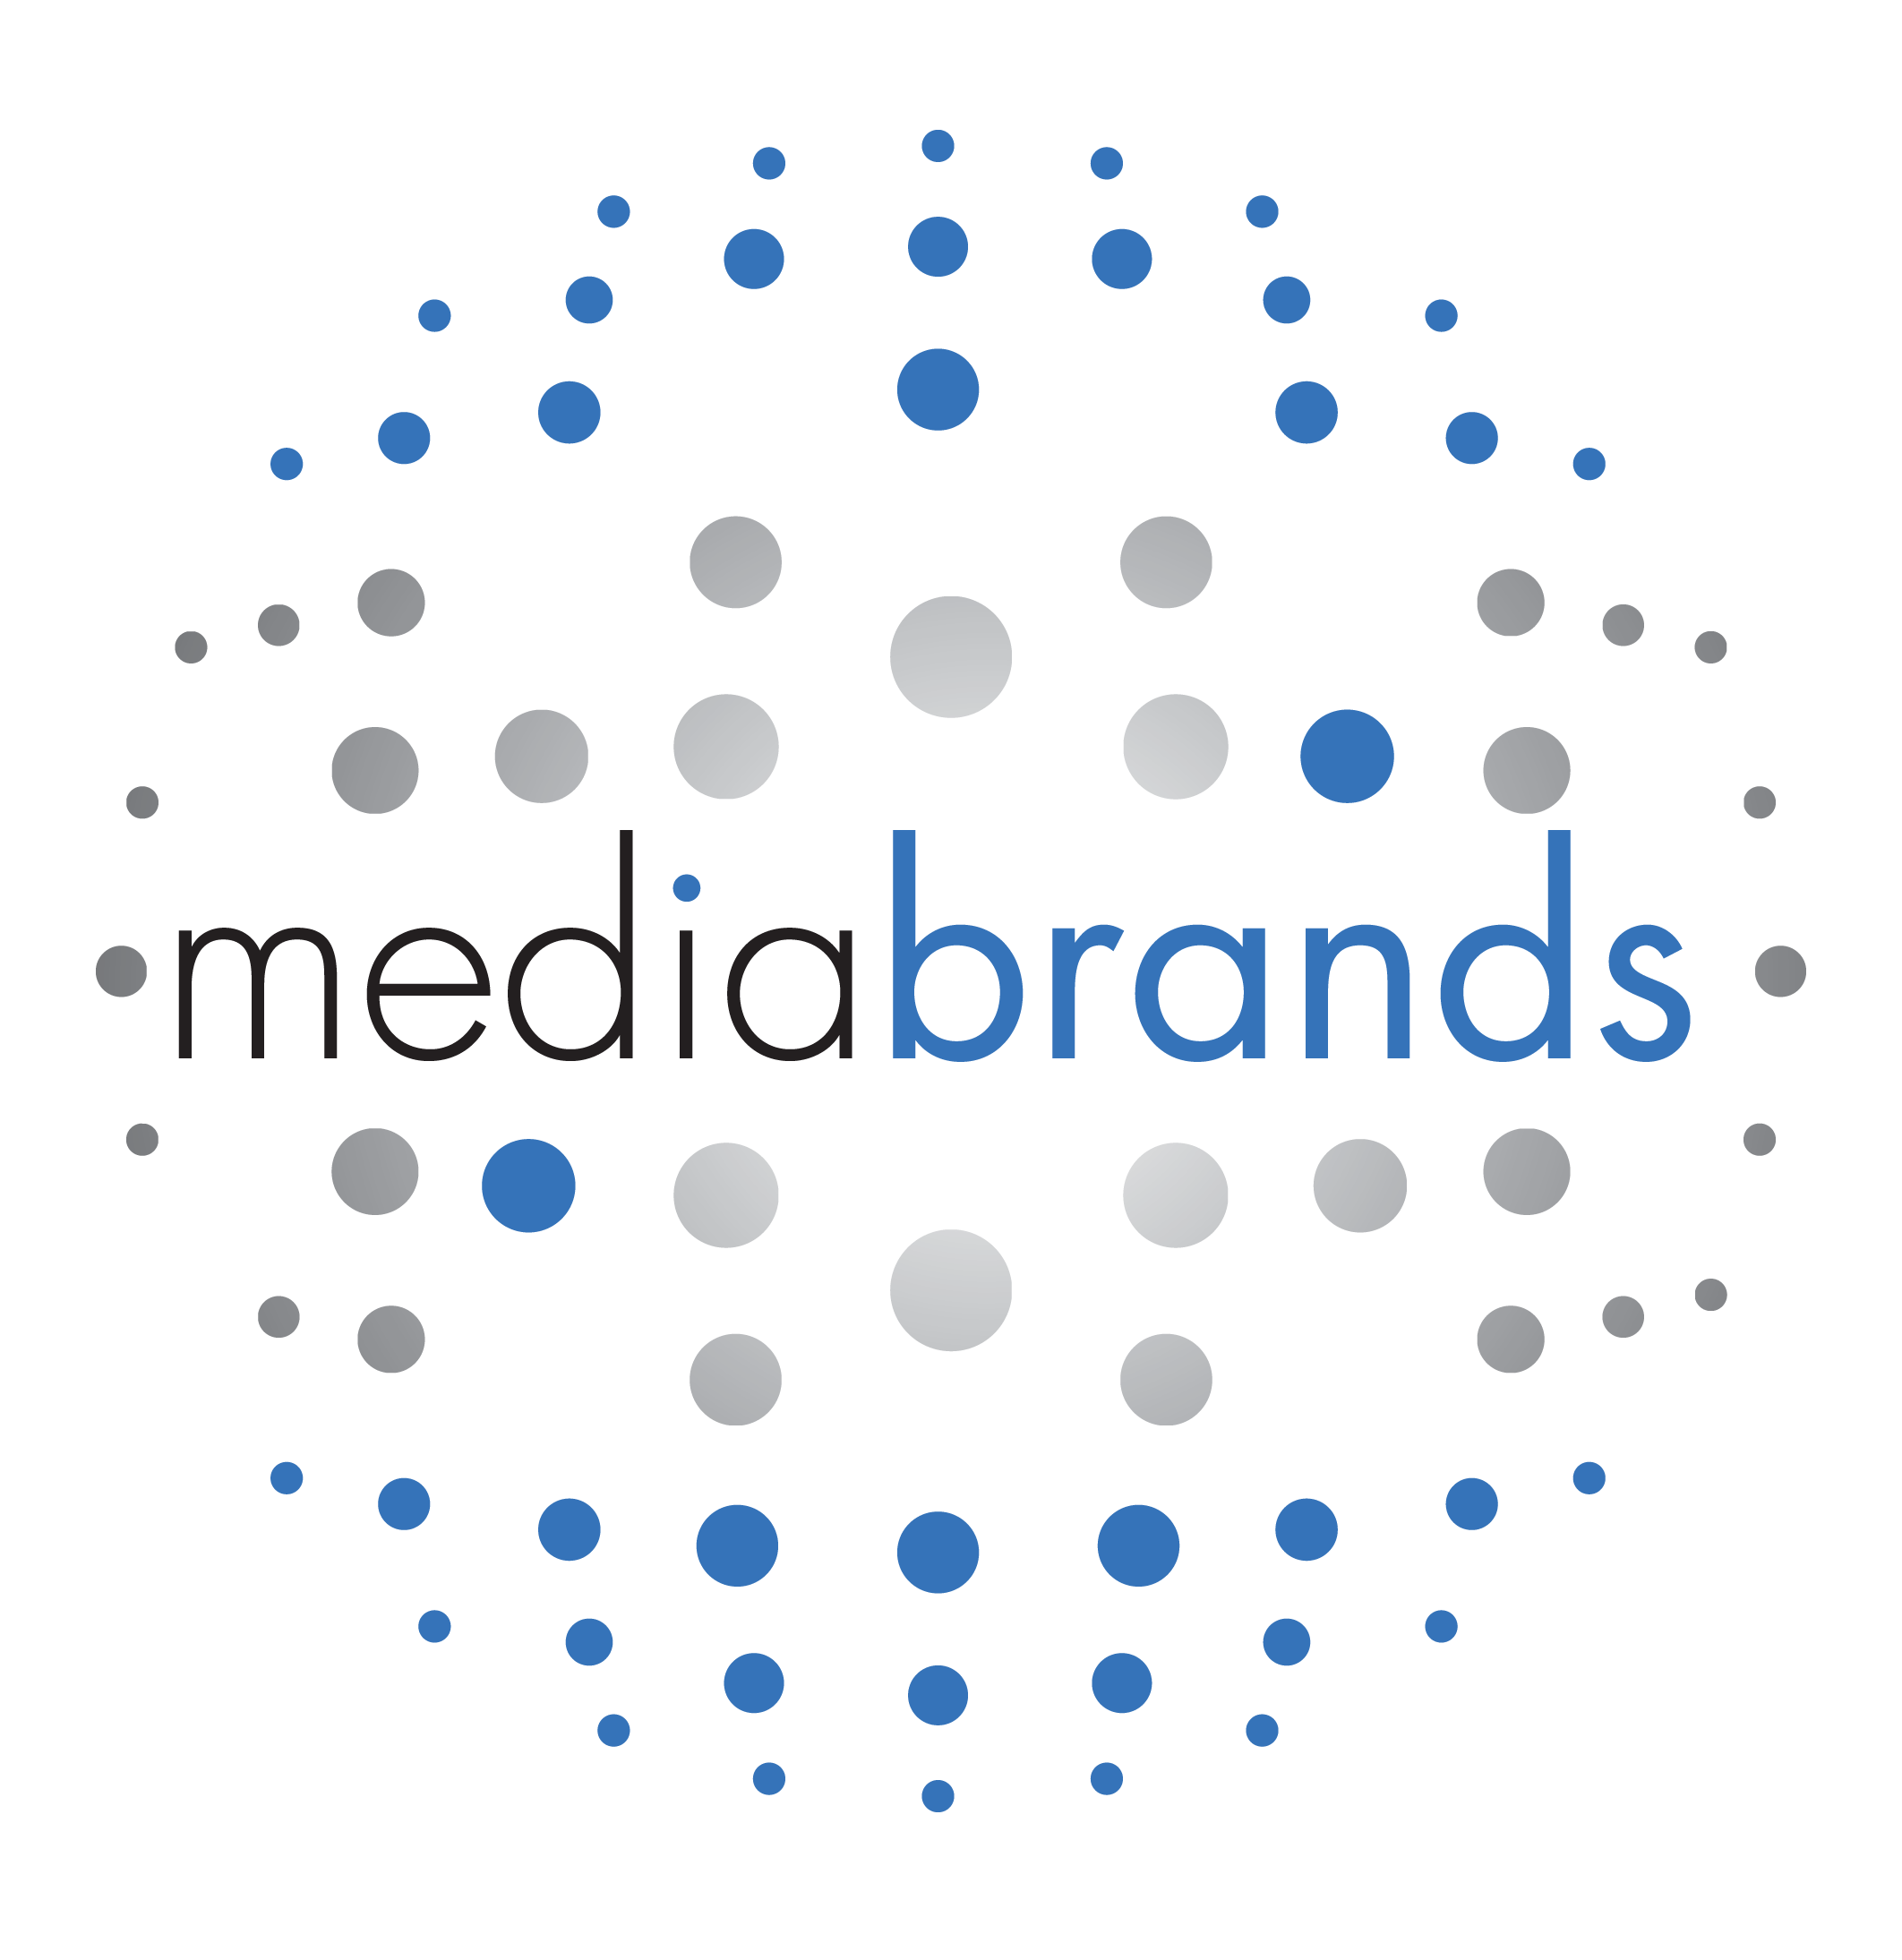 Mediabrands